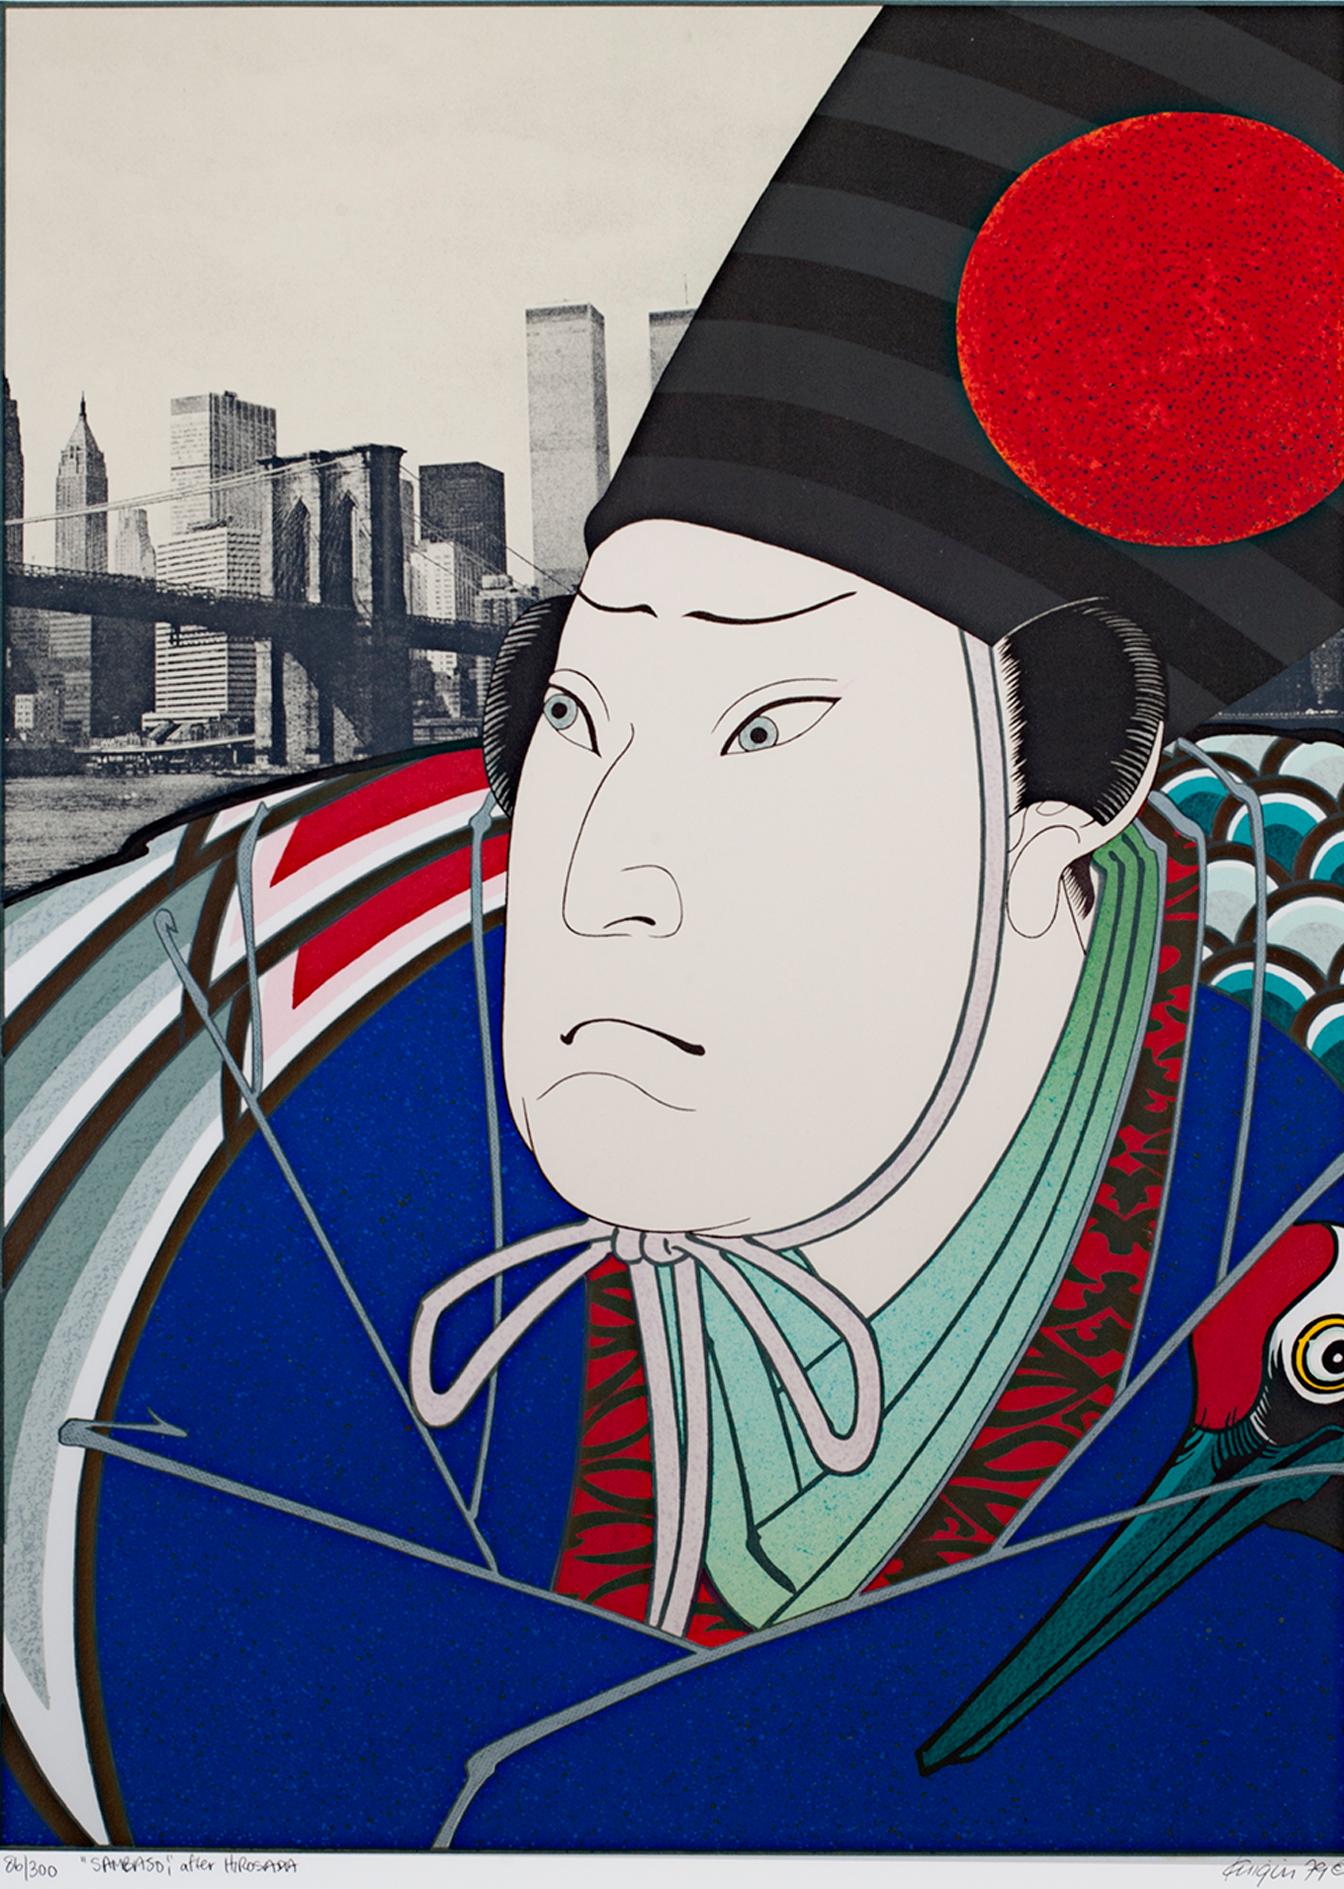 Michael Knigin Portrait Print - "Sambaso after Hirosada" original lithograph signed pop art bold Japanese figure